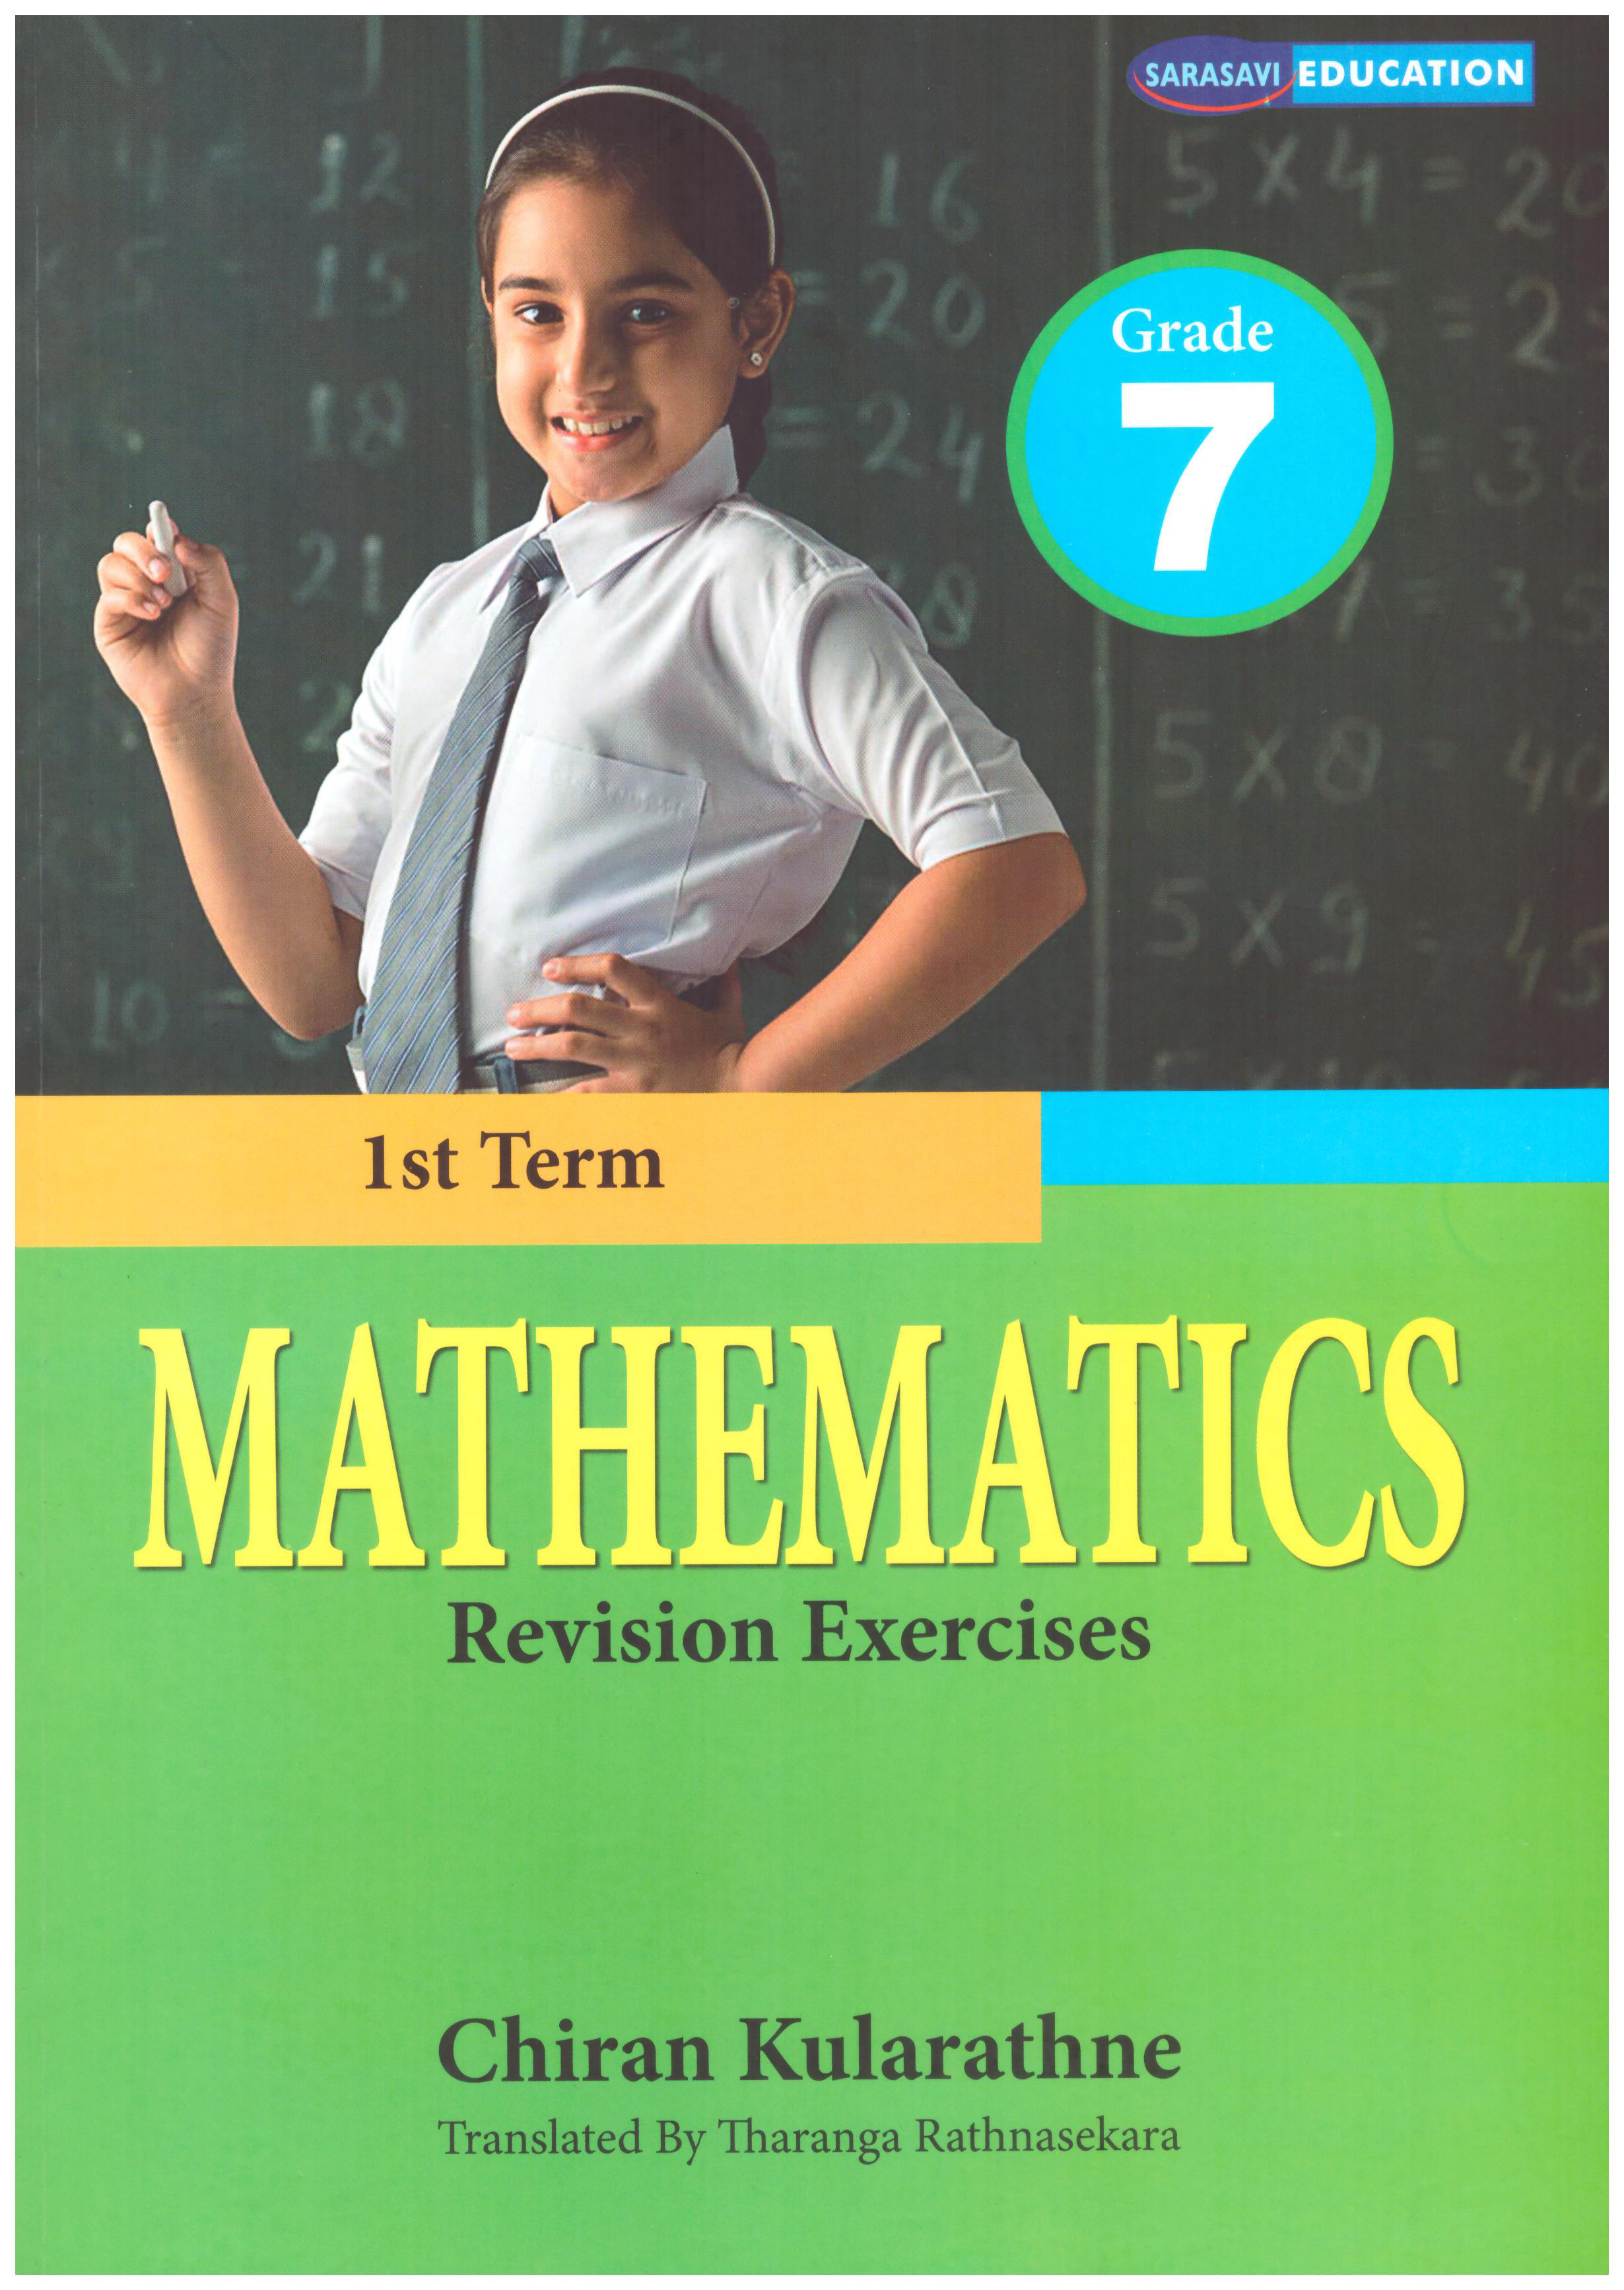 Grade 7 Mathematics Revision Exercises 1st Term